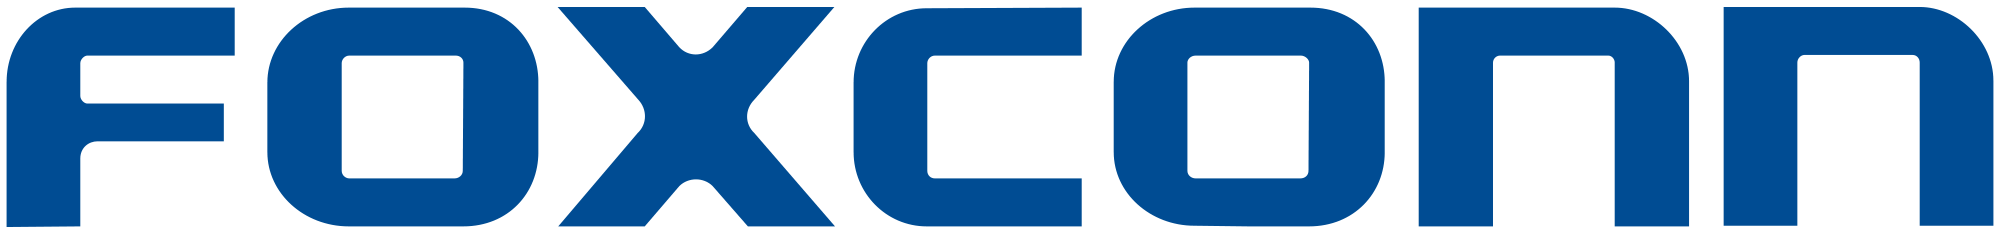 Foxconn Logo - File:Foxconn Logo.svg - Wikimedia Commons